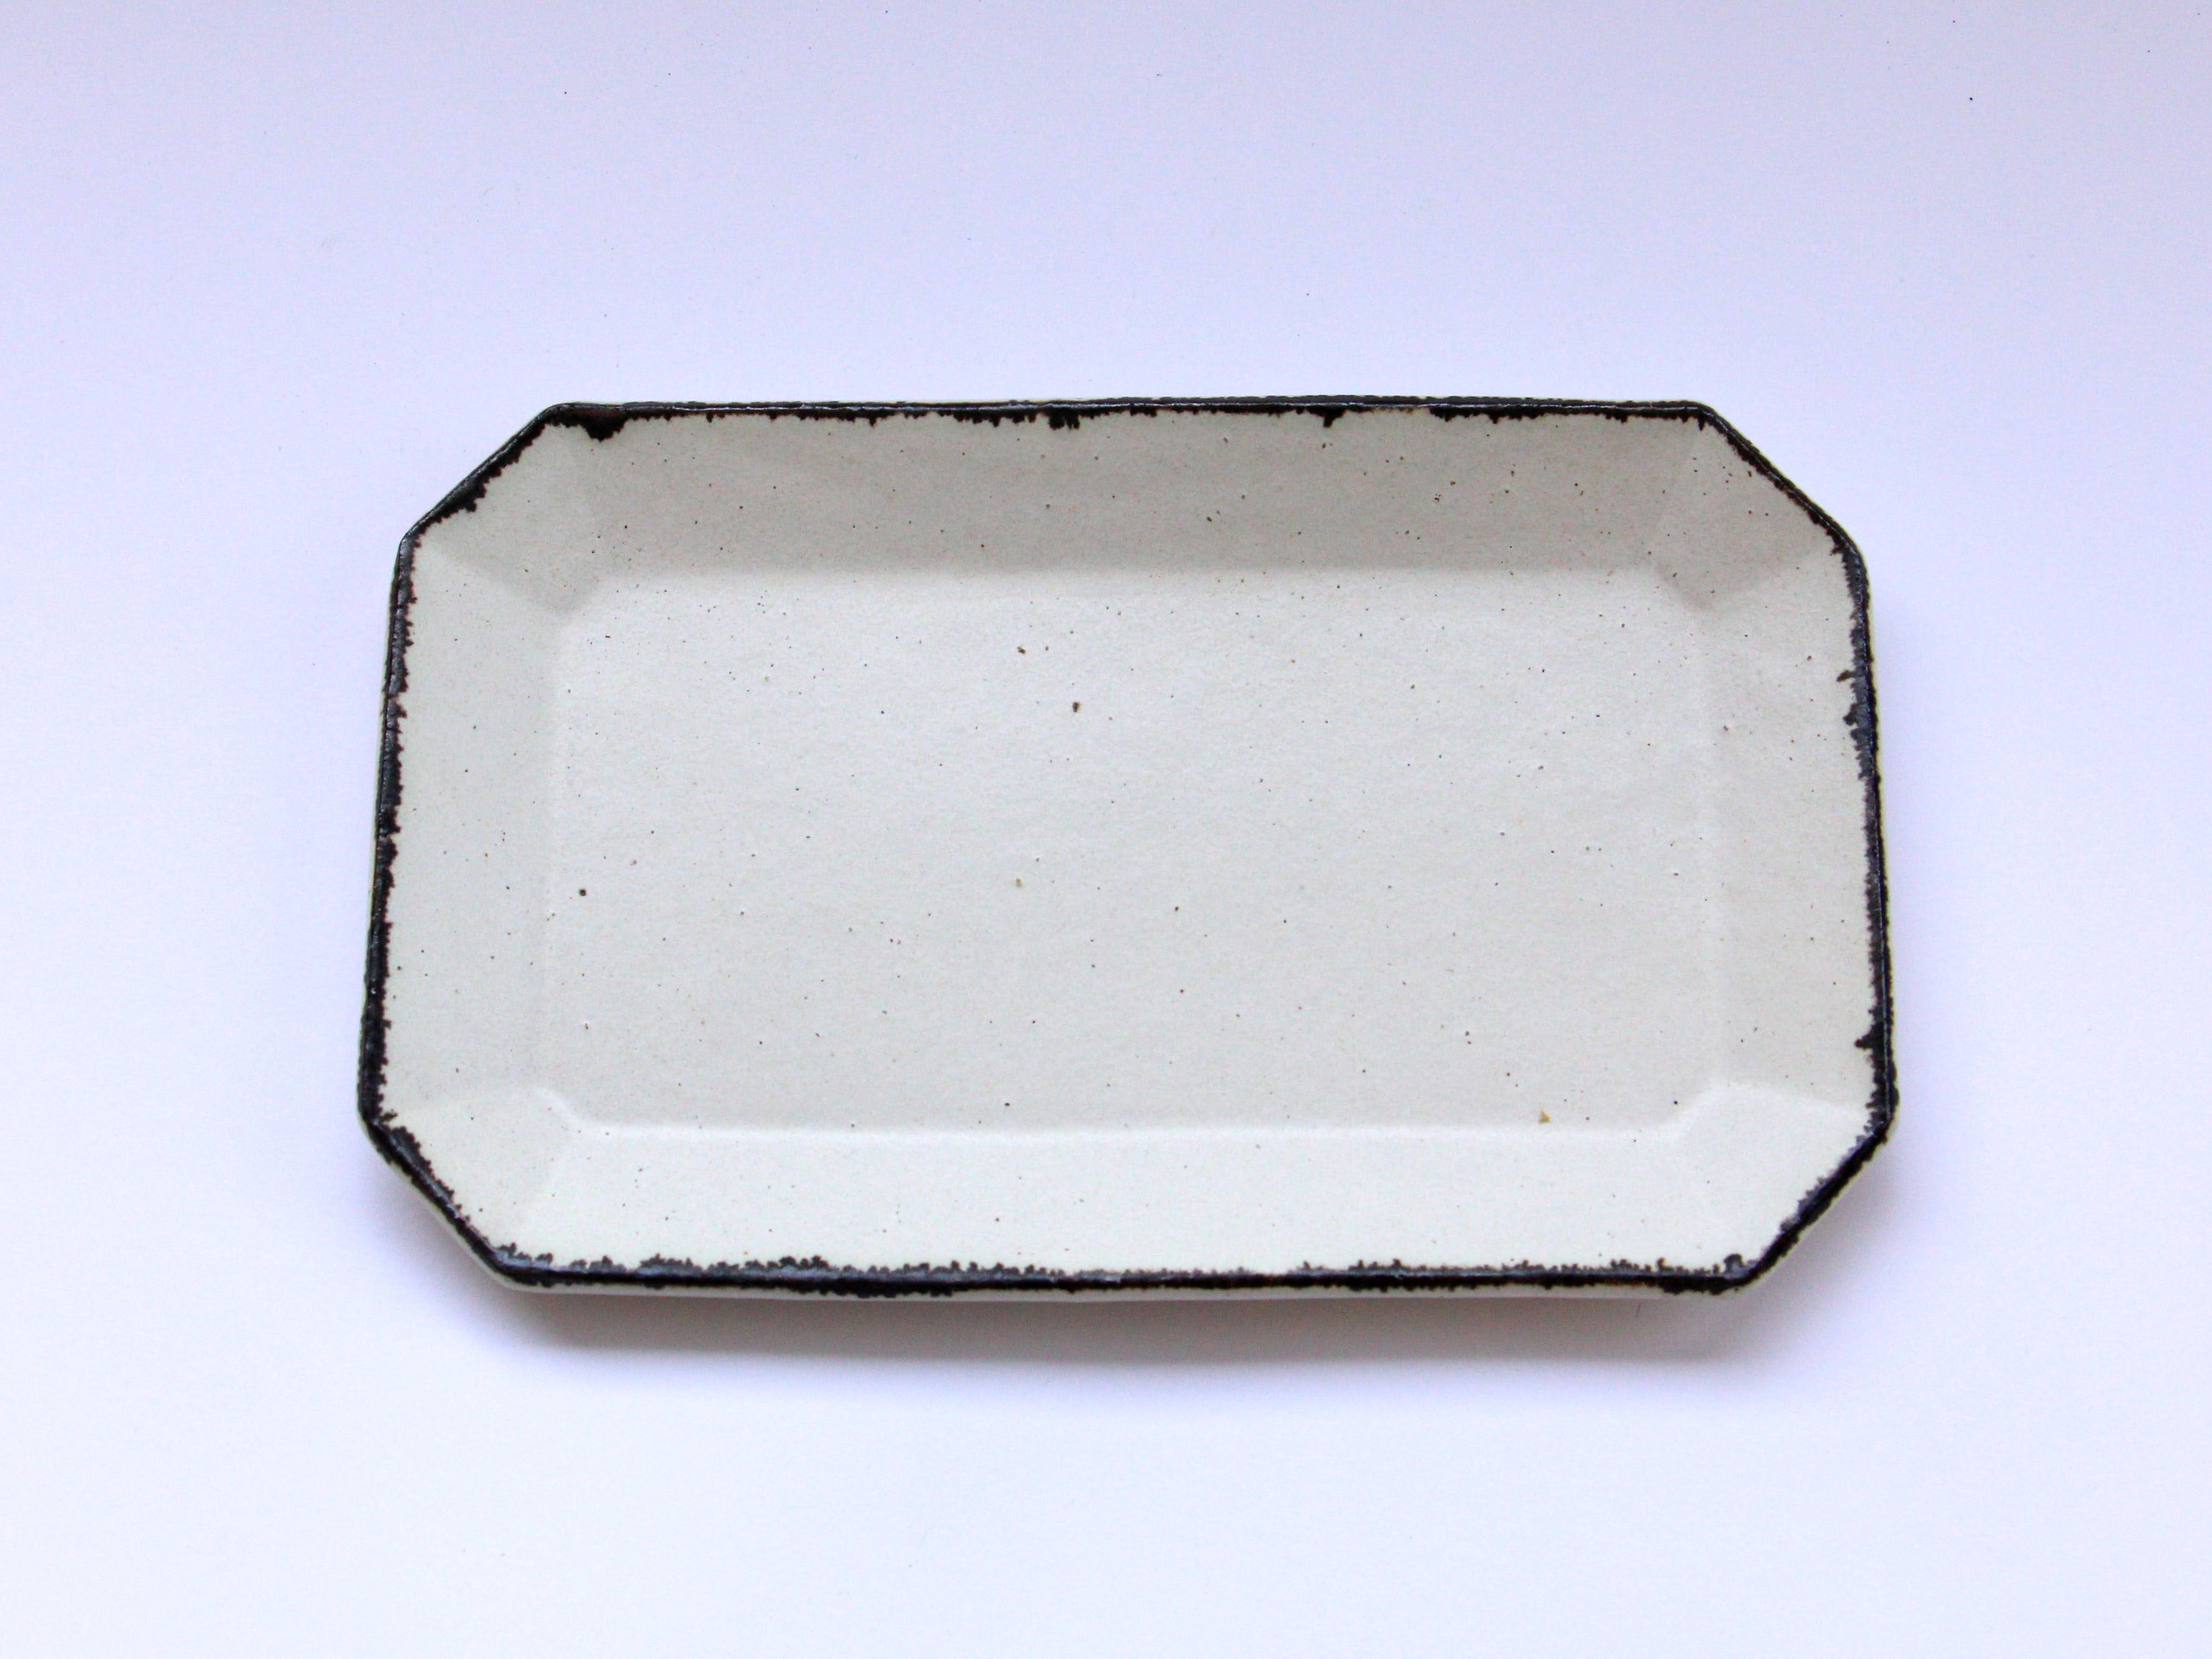 White mud corner cut long square plate [Bunzan Kanae]